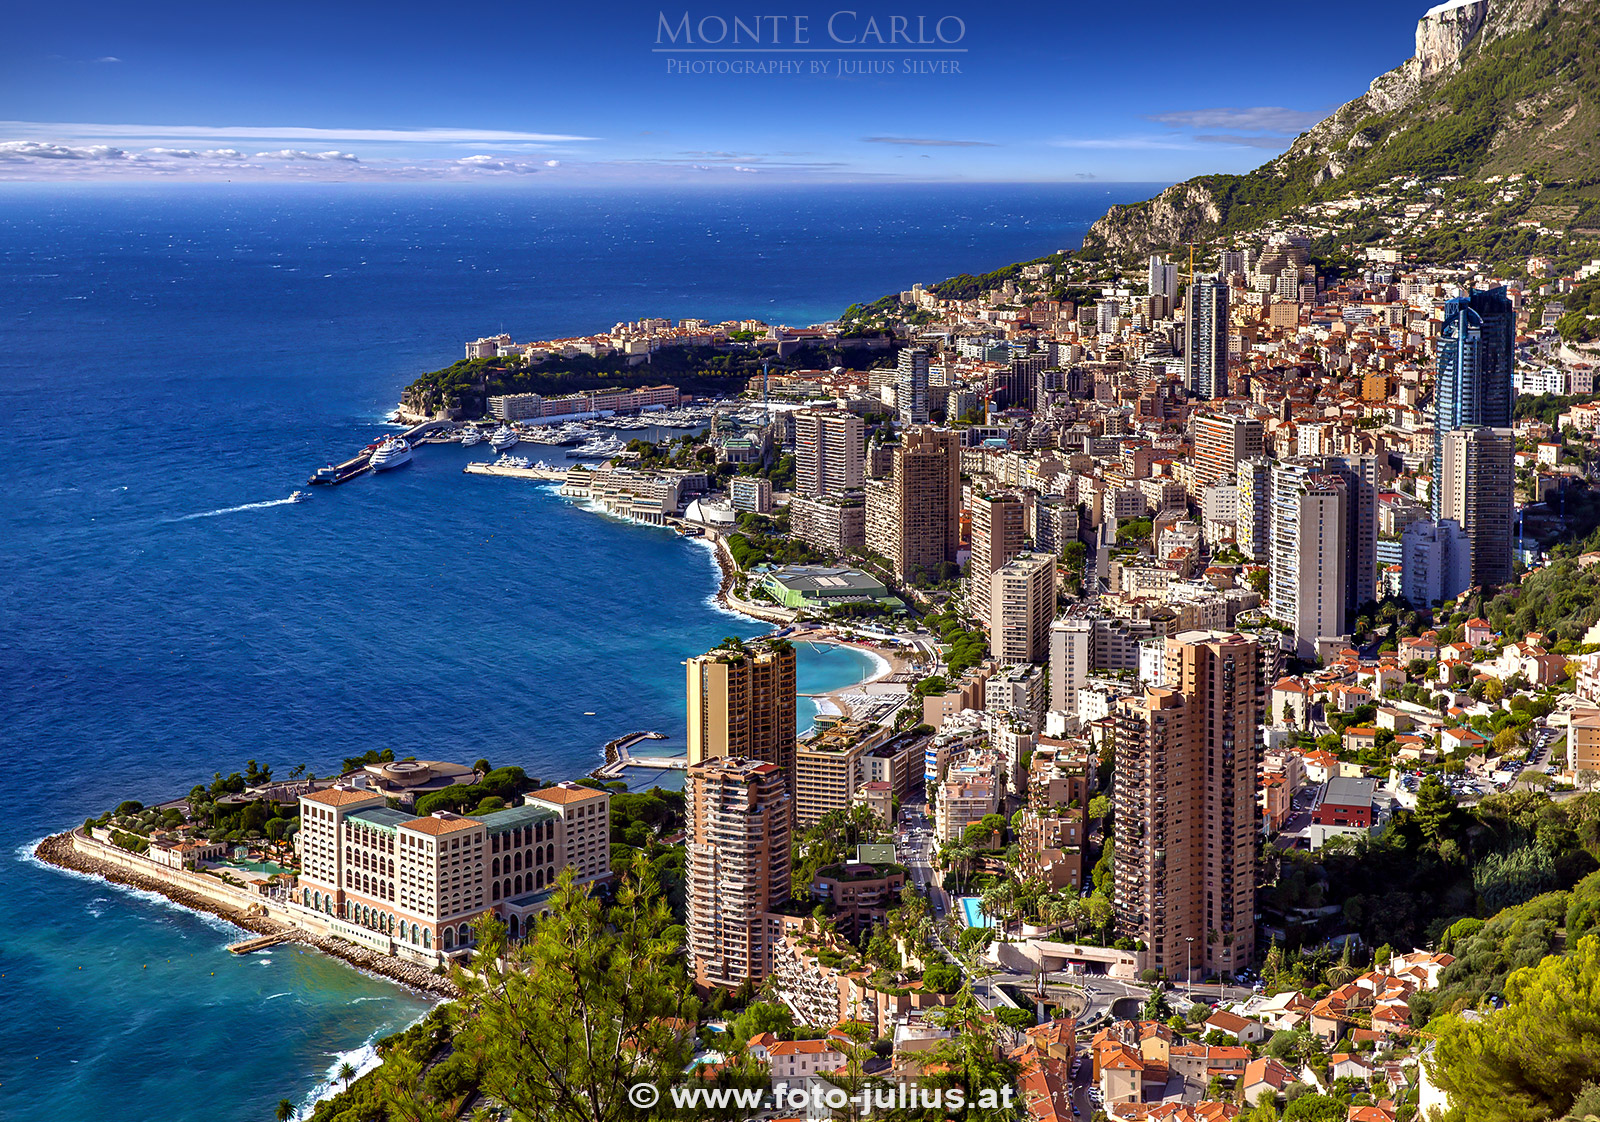 Monte_Carlo_001a.jpg, 971kB